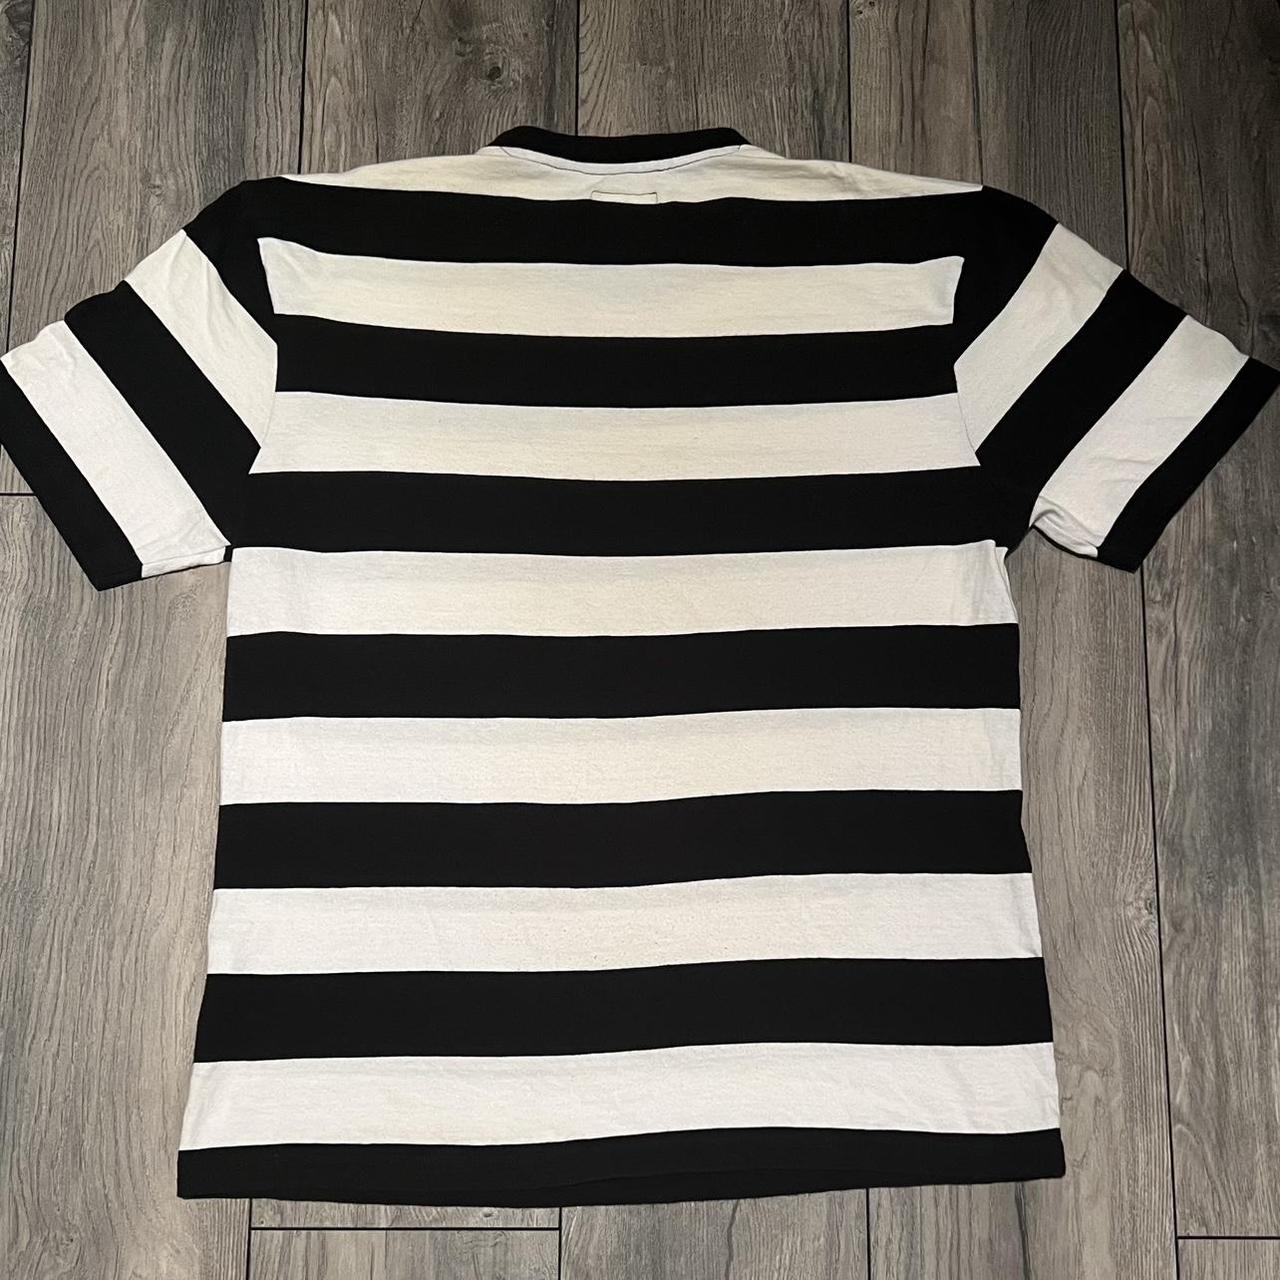 Stussy Black and White/Cream Striped Tee Shirt... - Depop